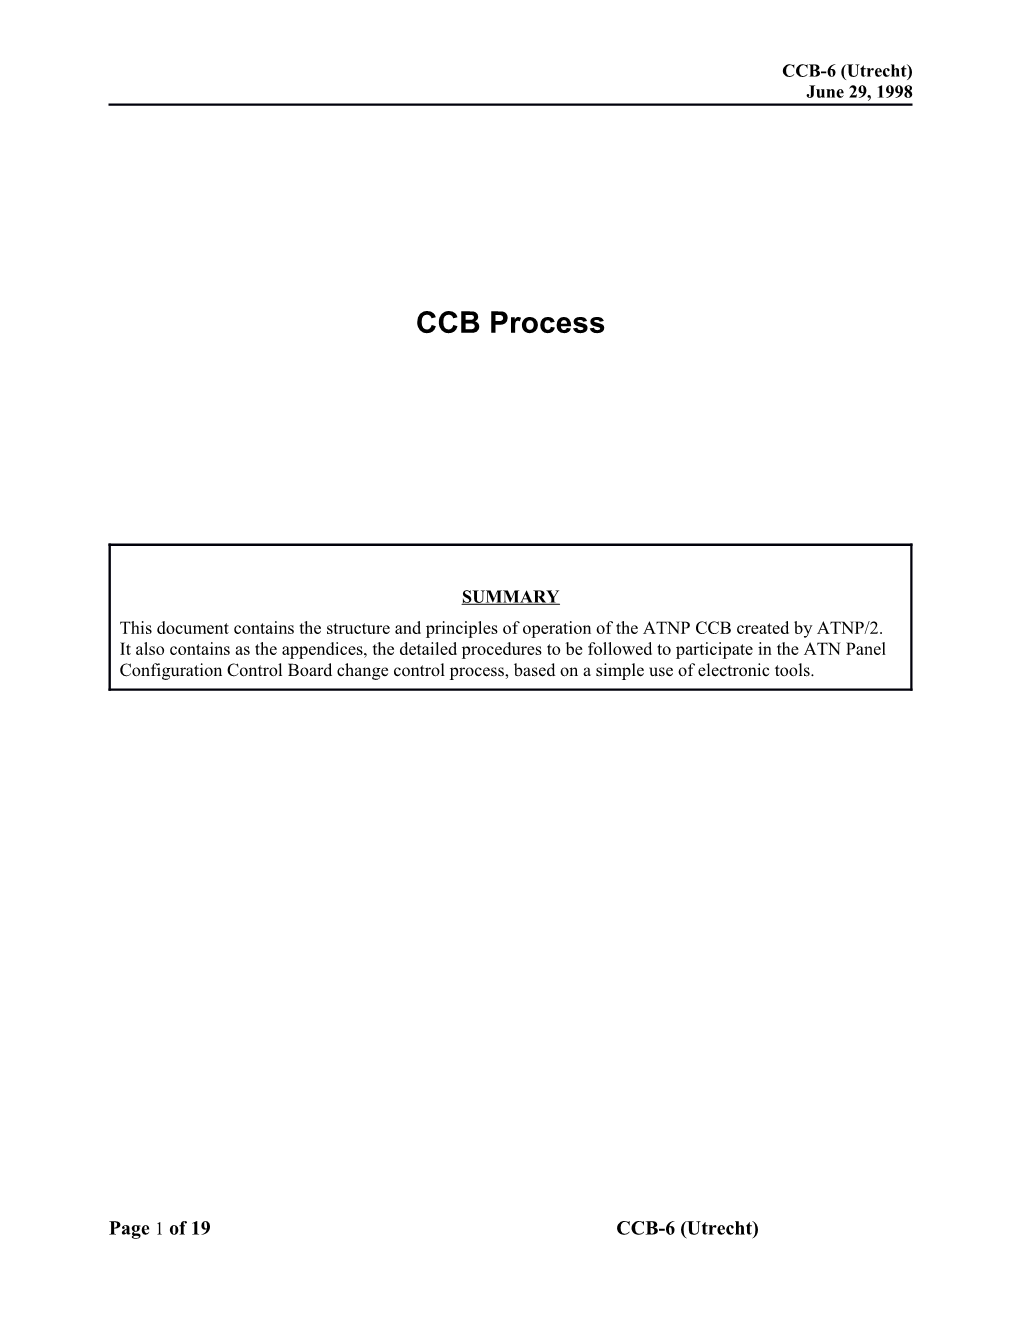 Aeronautical Telecommunications Network Panelatnp Configuration Control Board (CCB) Procedures